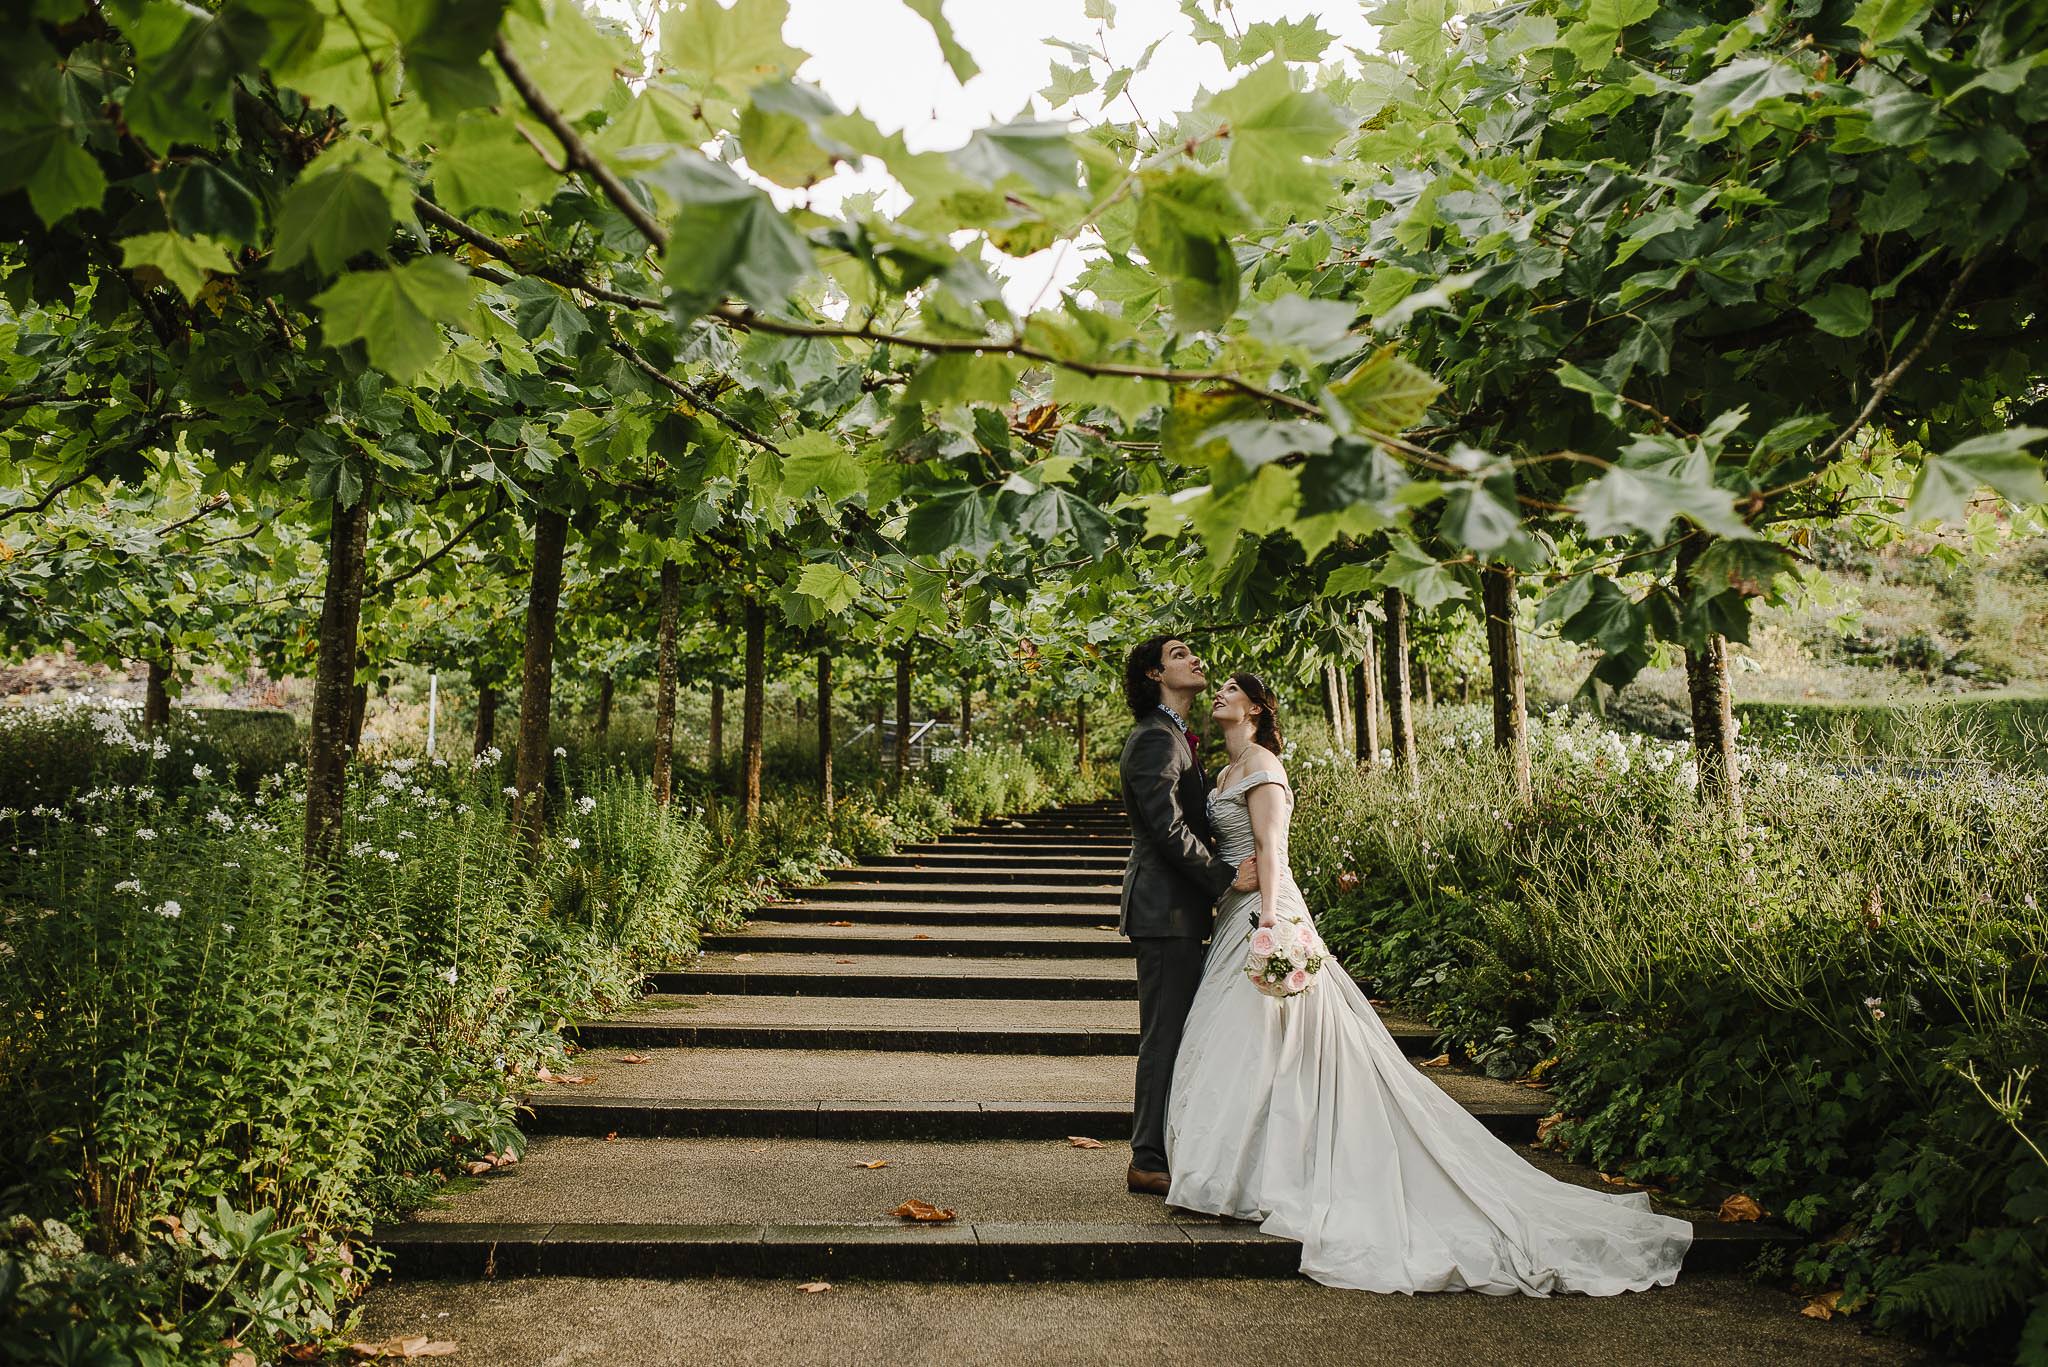 BEST-WEDDING-PHOTOGRAPHER-CORNWALL-2018-48.jpg